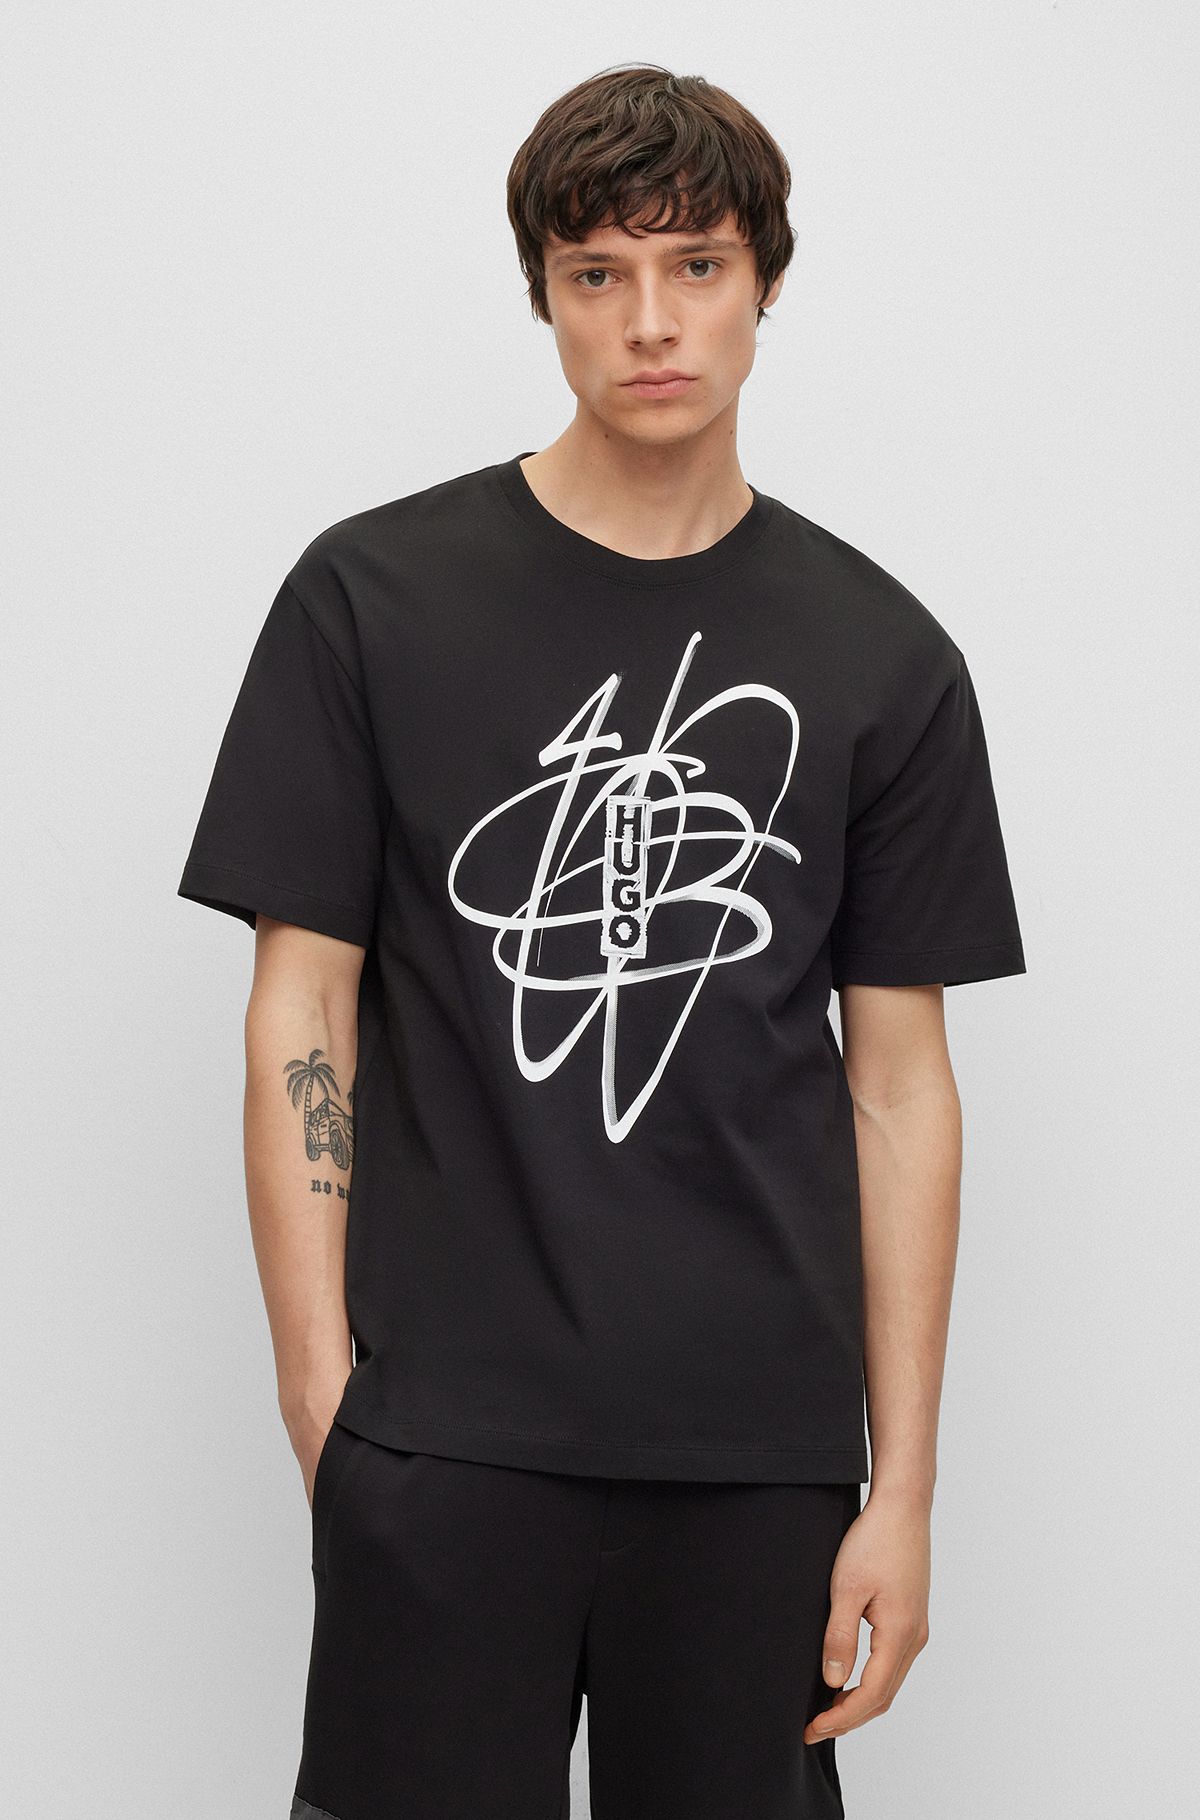 Cotton-jersey T-shirt with graffiti-inspired artwork, Black